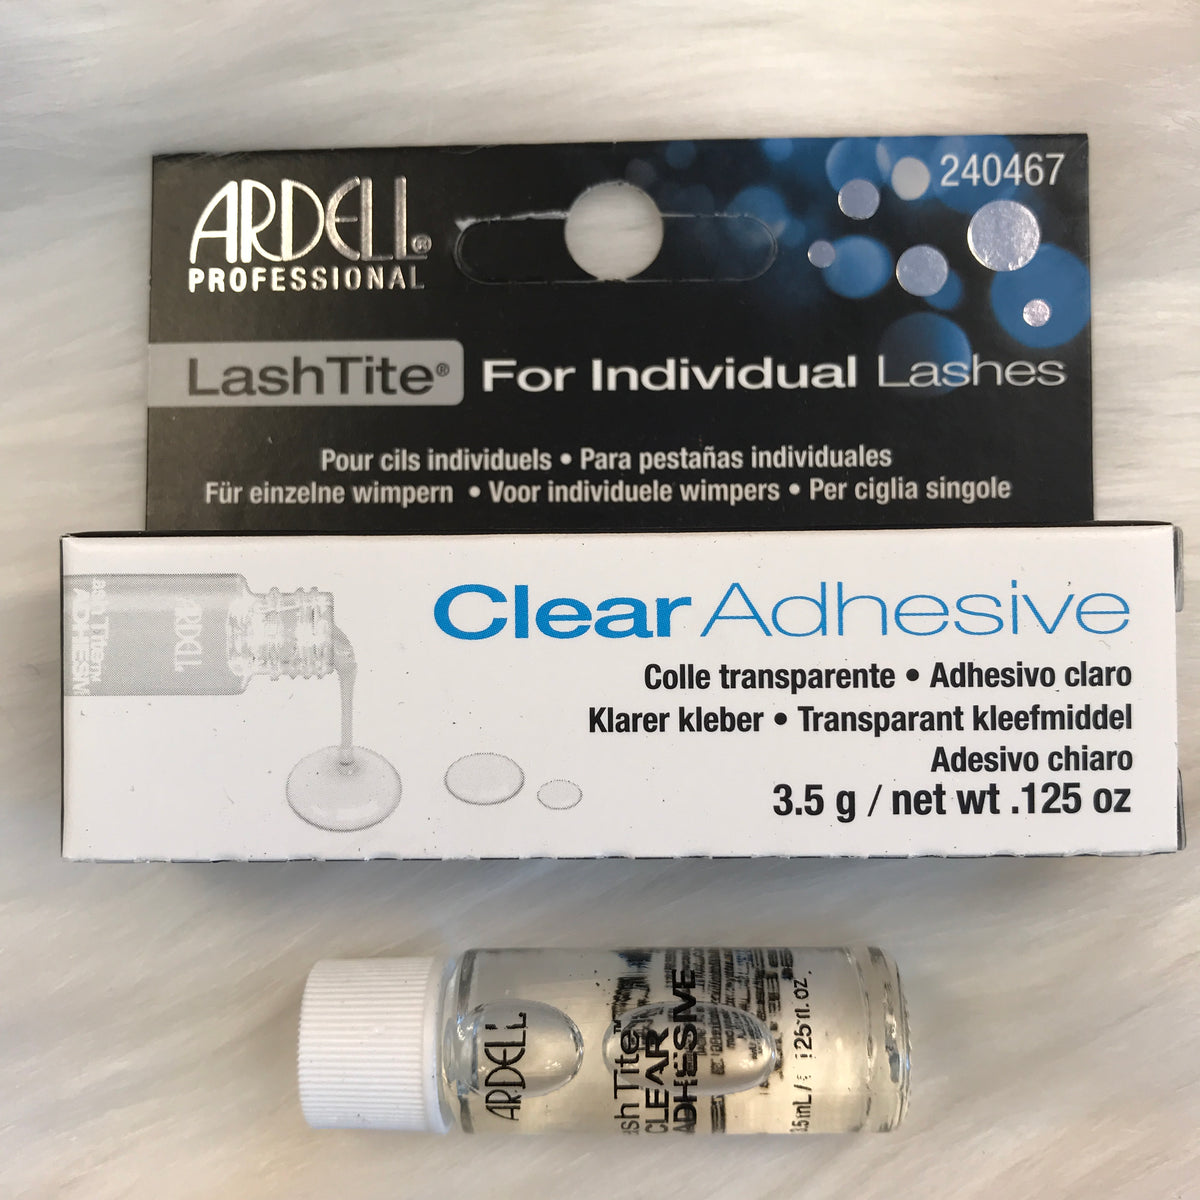 LashTite- For individual lashes- Clear adhesive